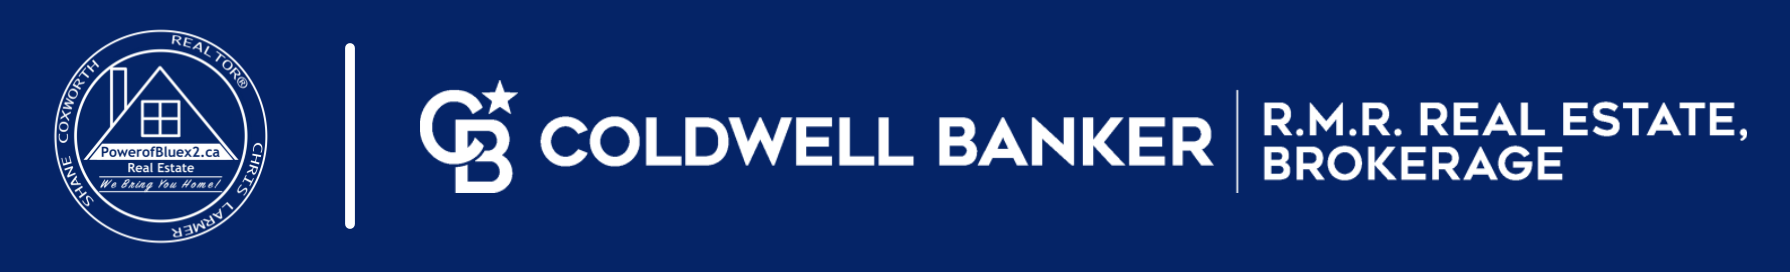 PowerofBluex2 - Coldwell Banker R.M.R. Real Estate, Brokerage